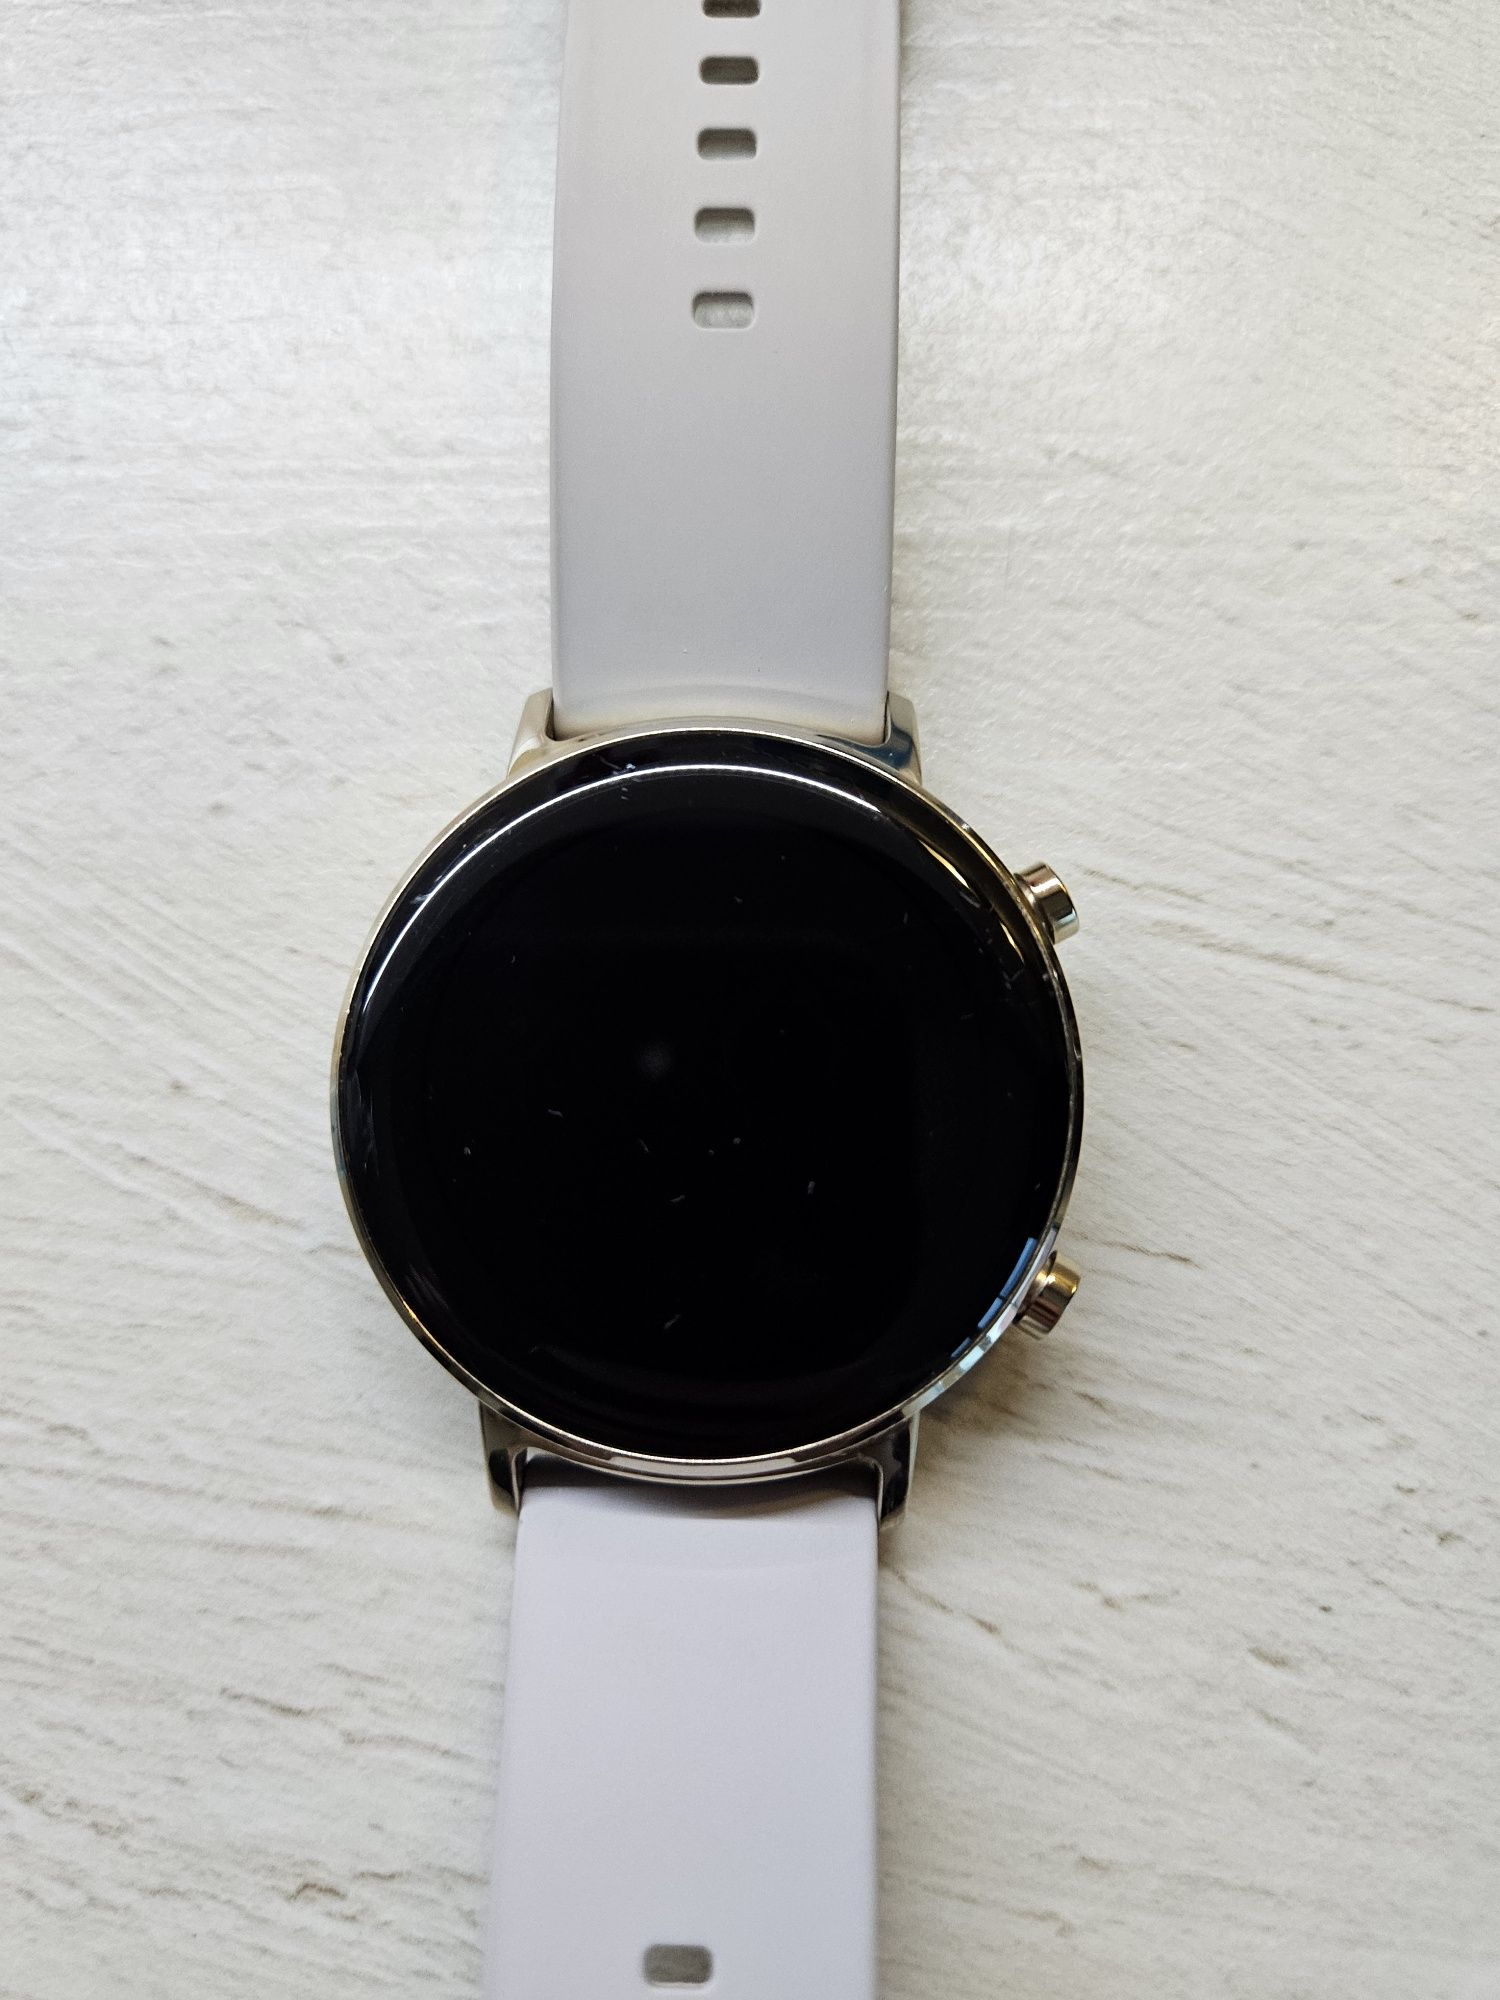 Vând pachet Huawei : P30 Pro, Smartwatch GT 2